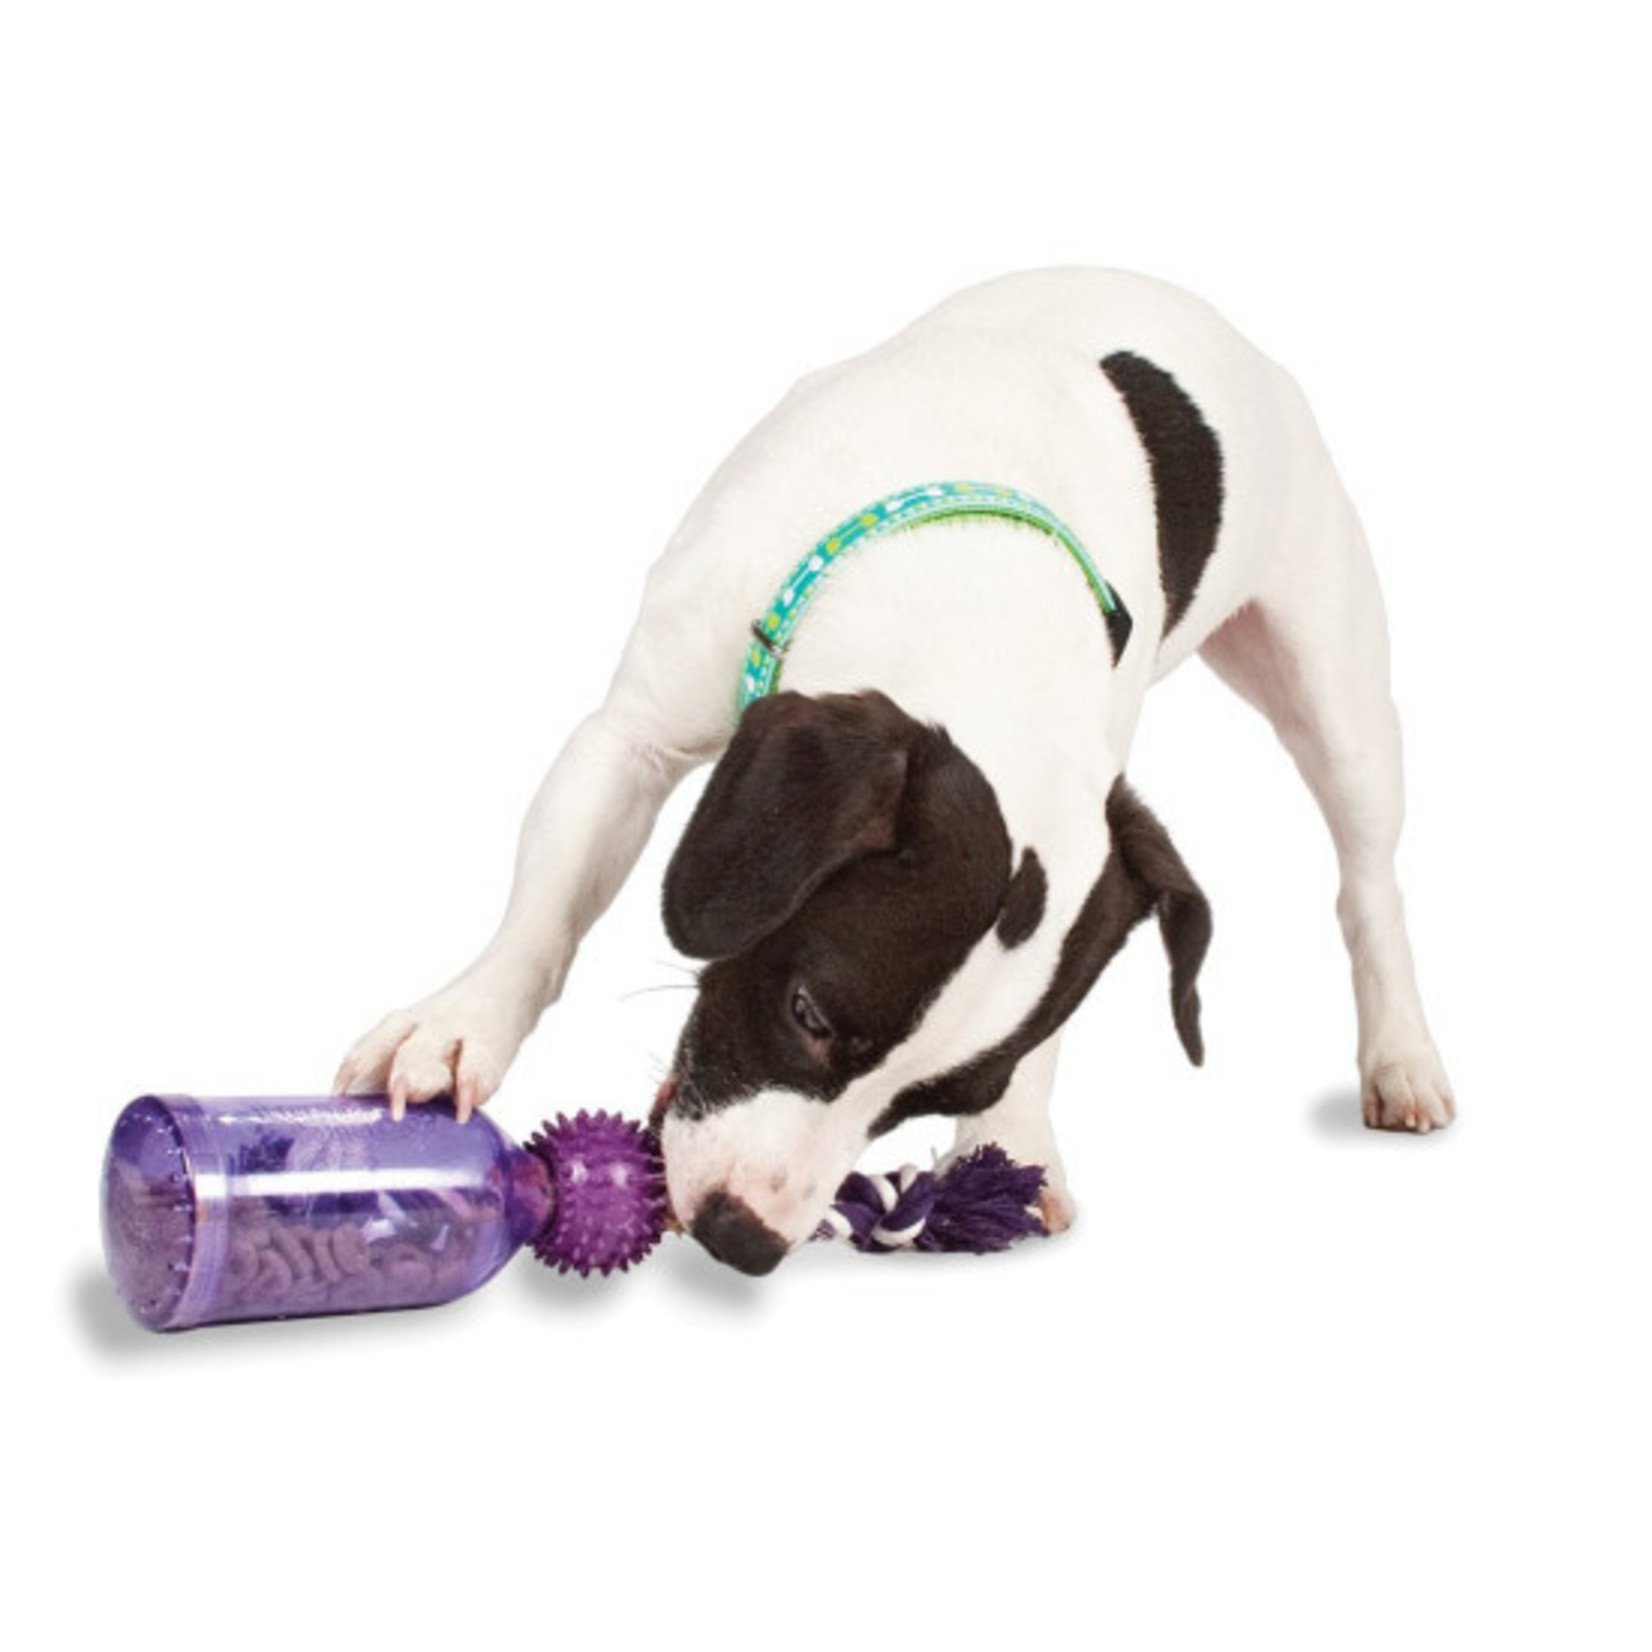 PetSafe Busy Buddy Tug-a-jug Dog Treat Dispensing Toy